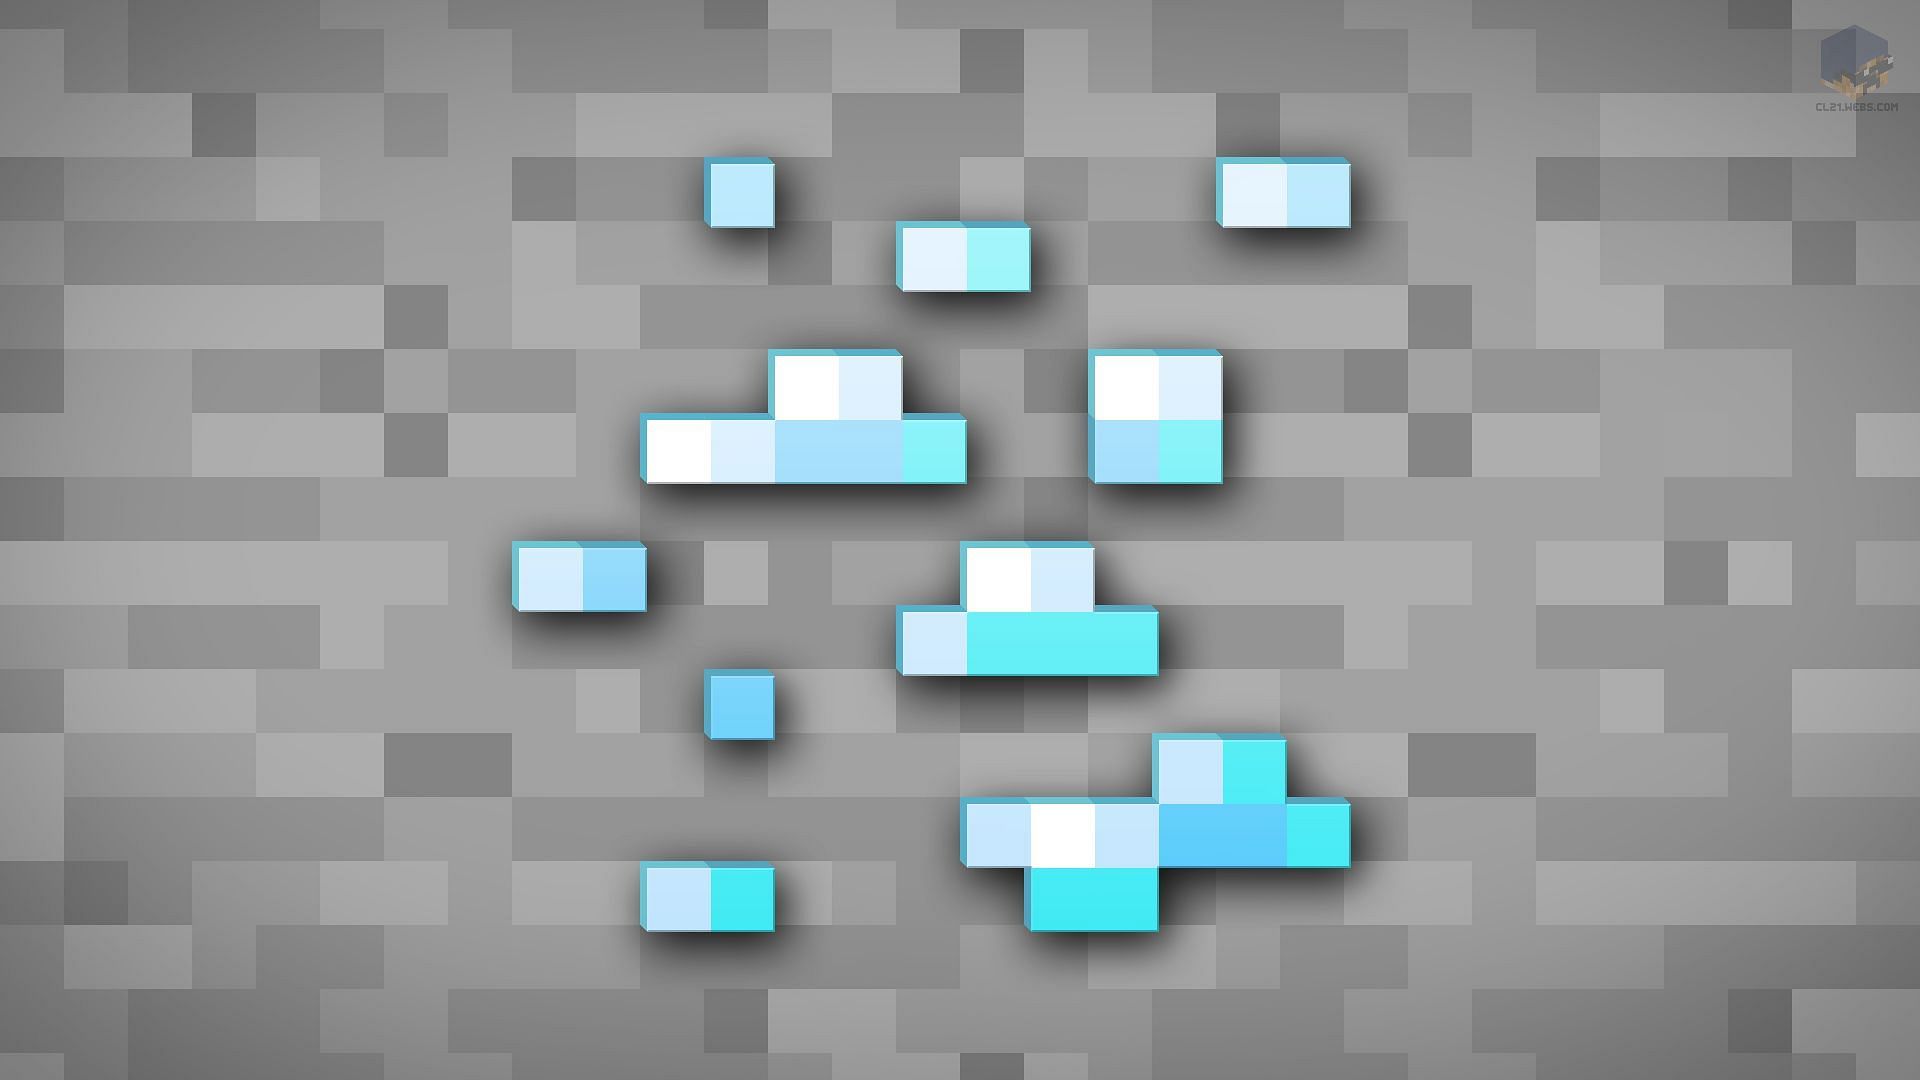 Diamond ore in Minecraft 1.18 (Image via WallpaperSafari/Minecraft)